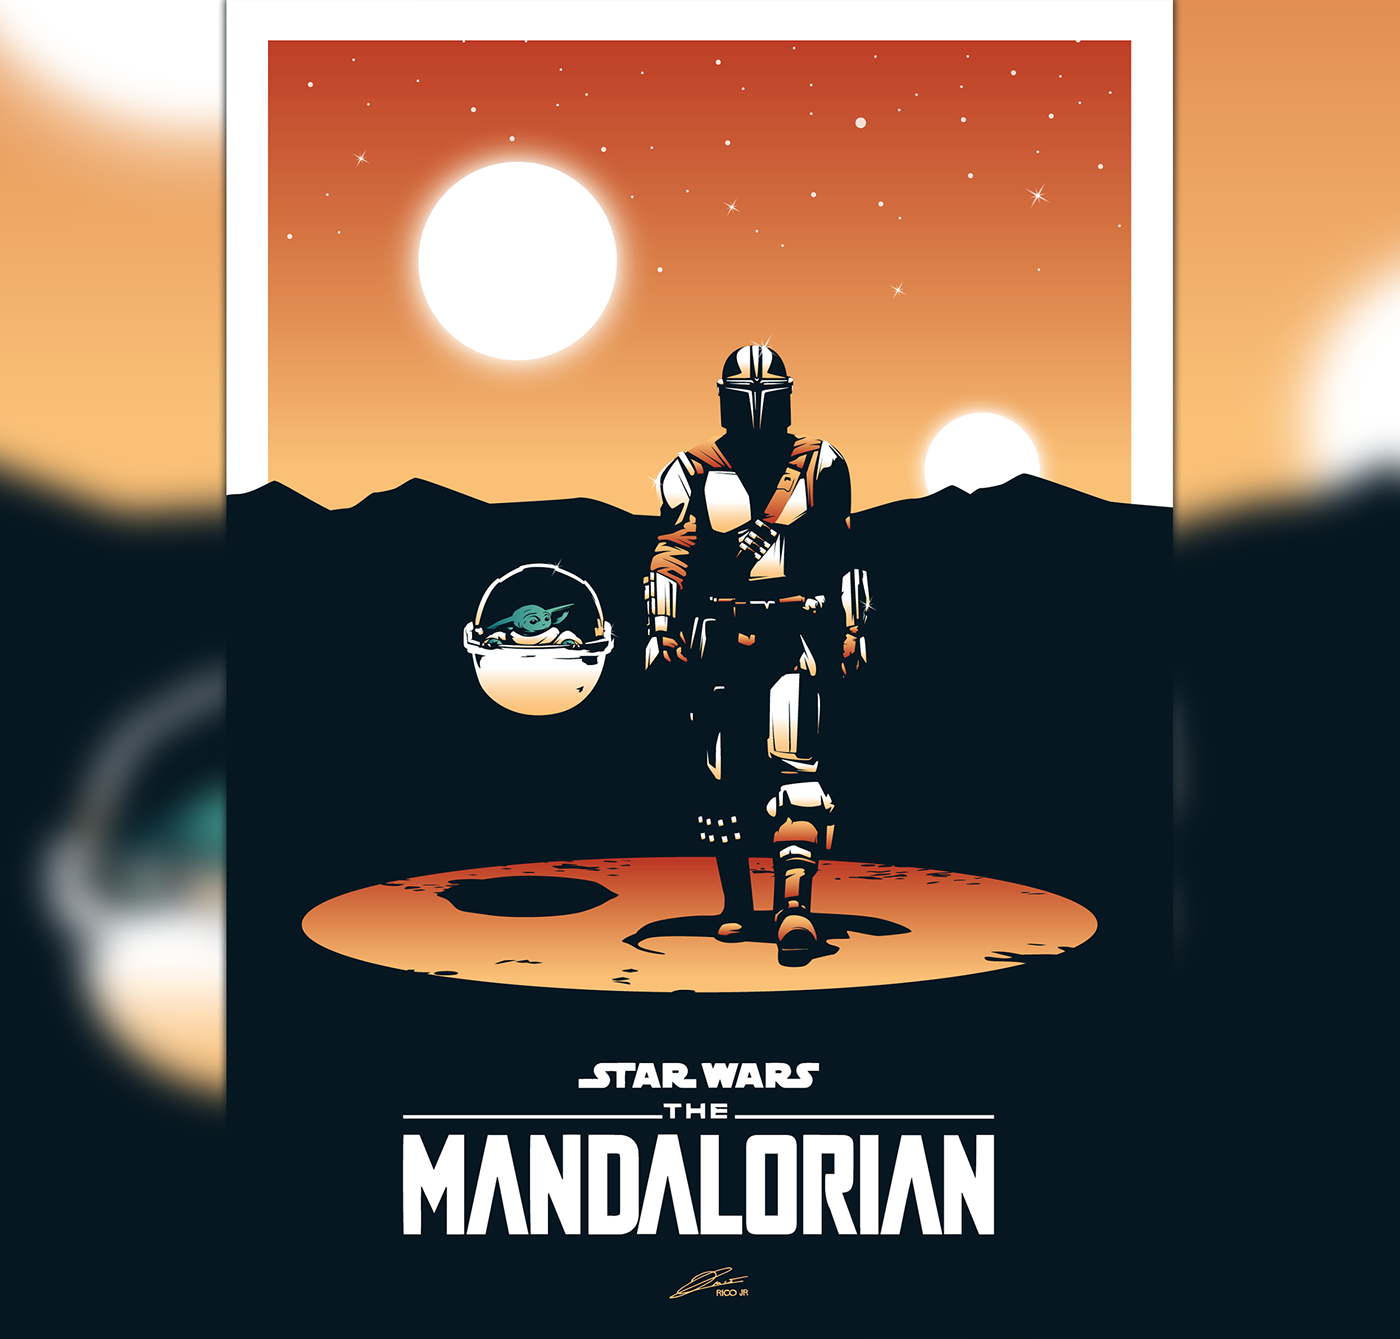 boba fett duo minimalist poster skywalker Space  star wars The Mandalorian yoda